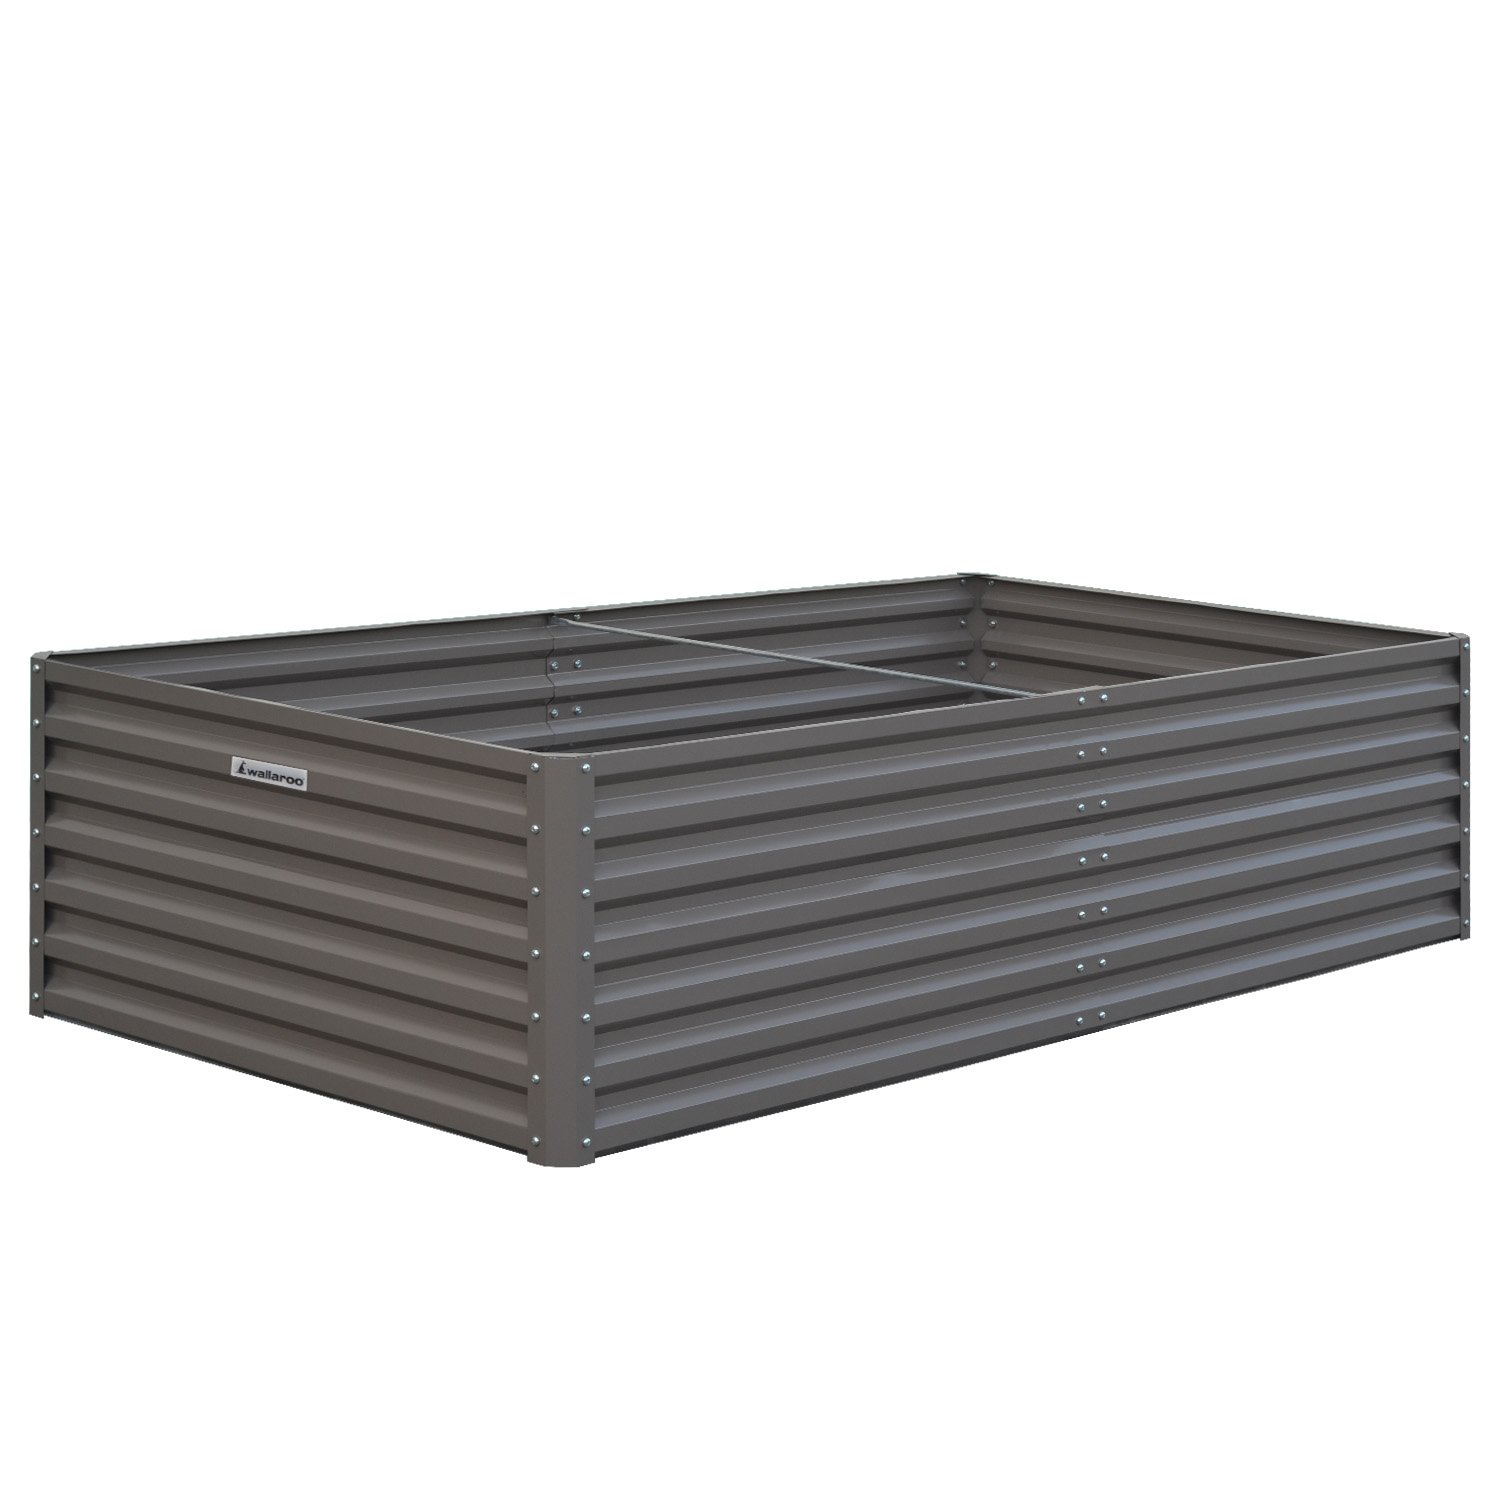 Wallaroo Garden Bed 240 x 120 x 57cm Galvanized Steel - Grey 2